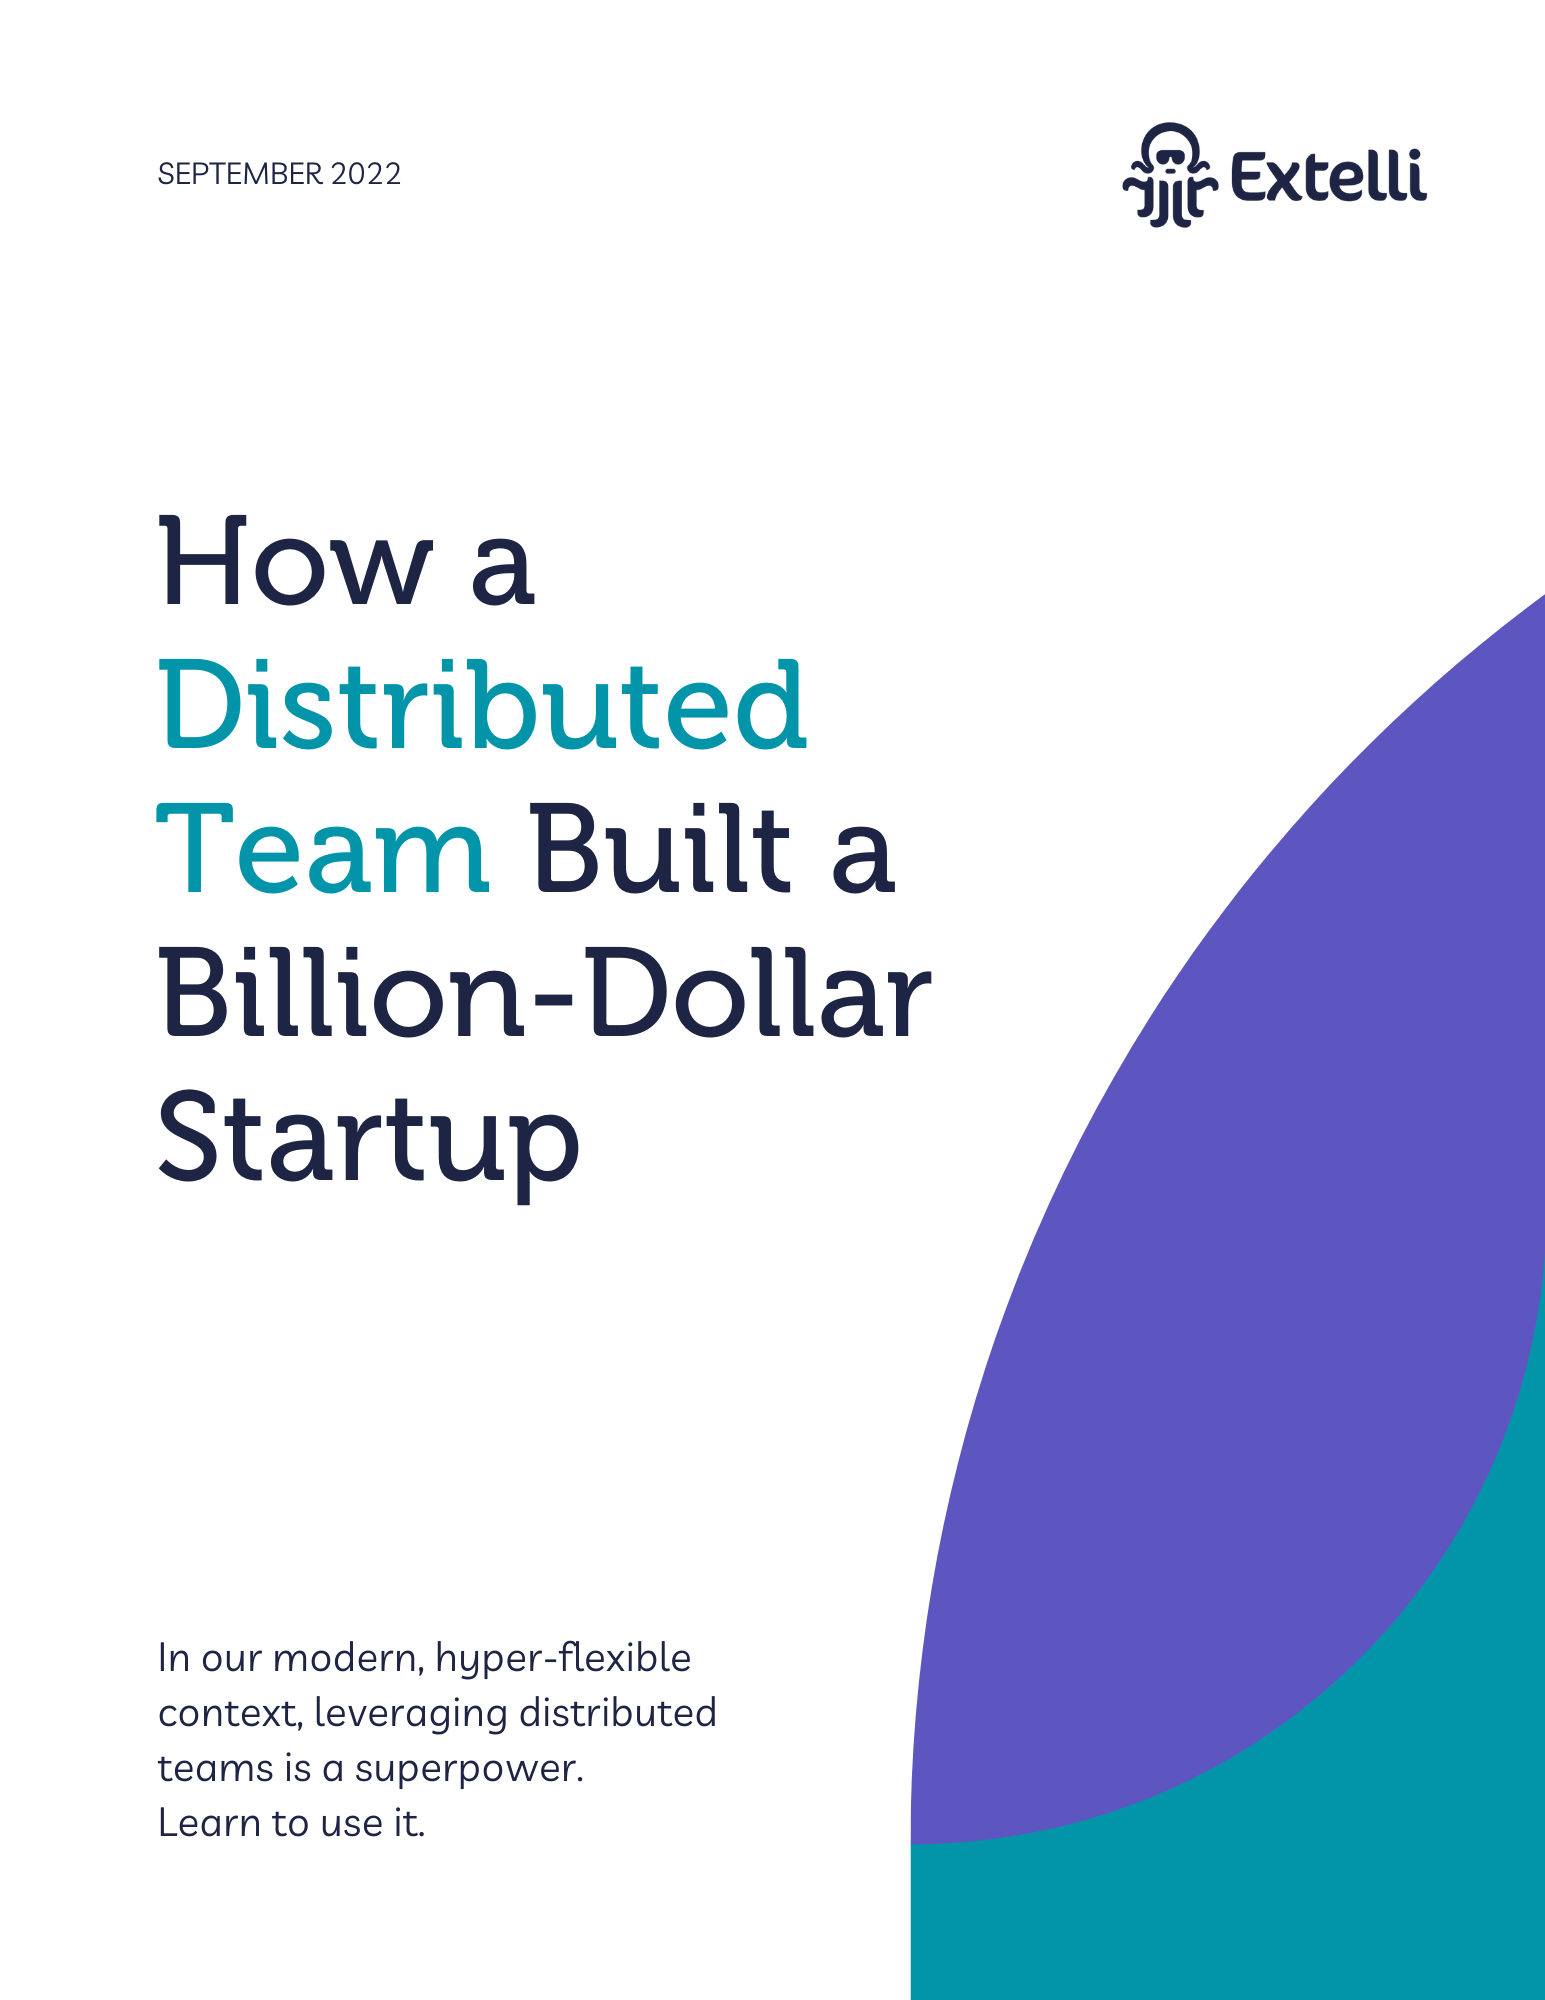 How a Distributed Team Built a Billion-Dollar Startup